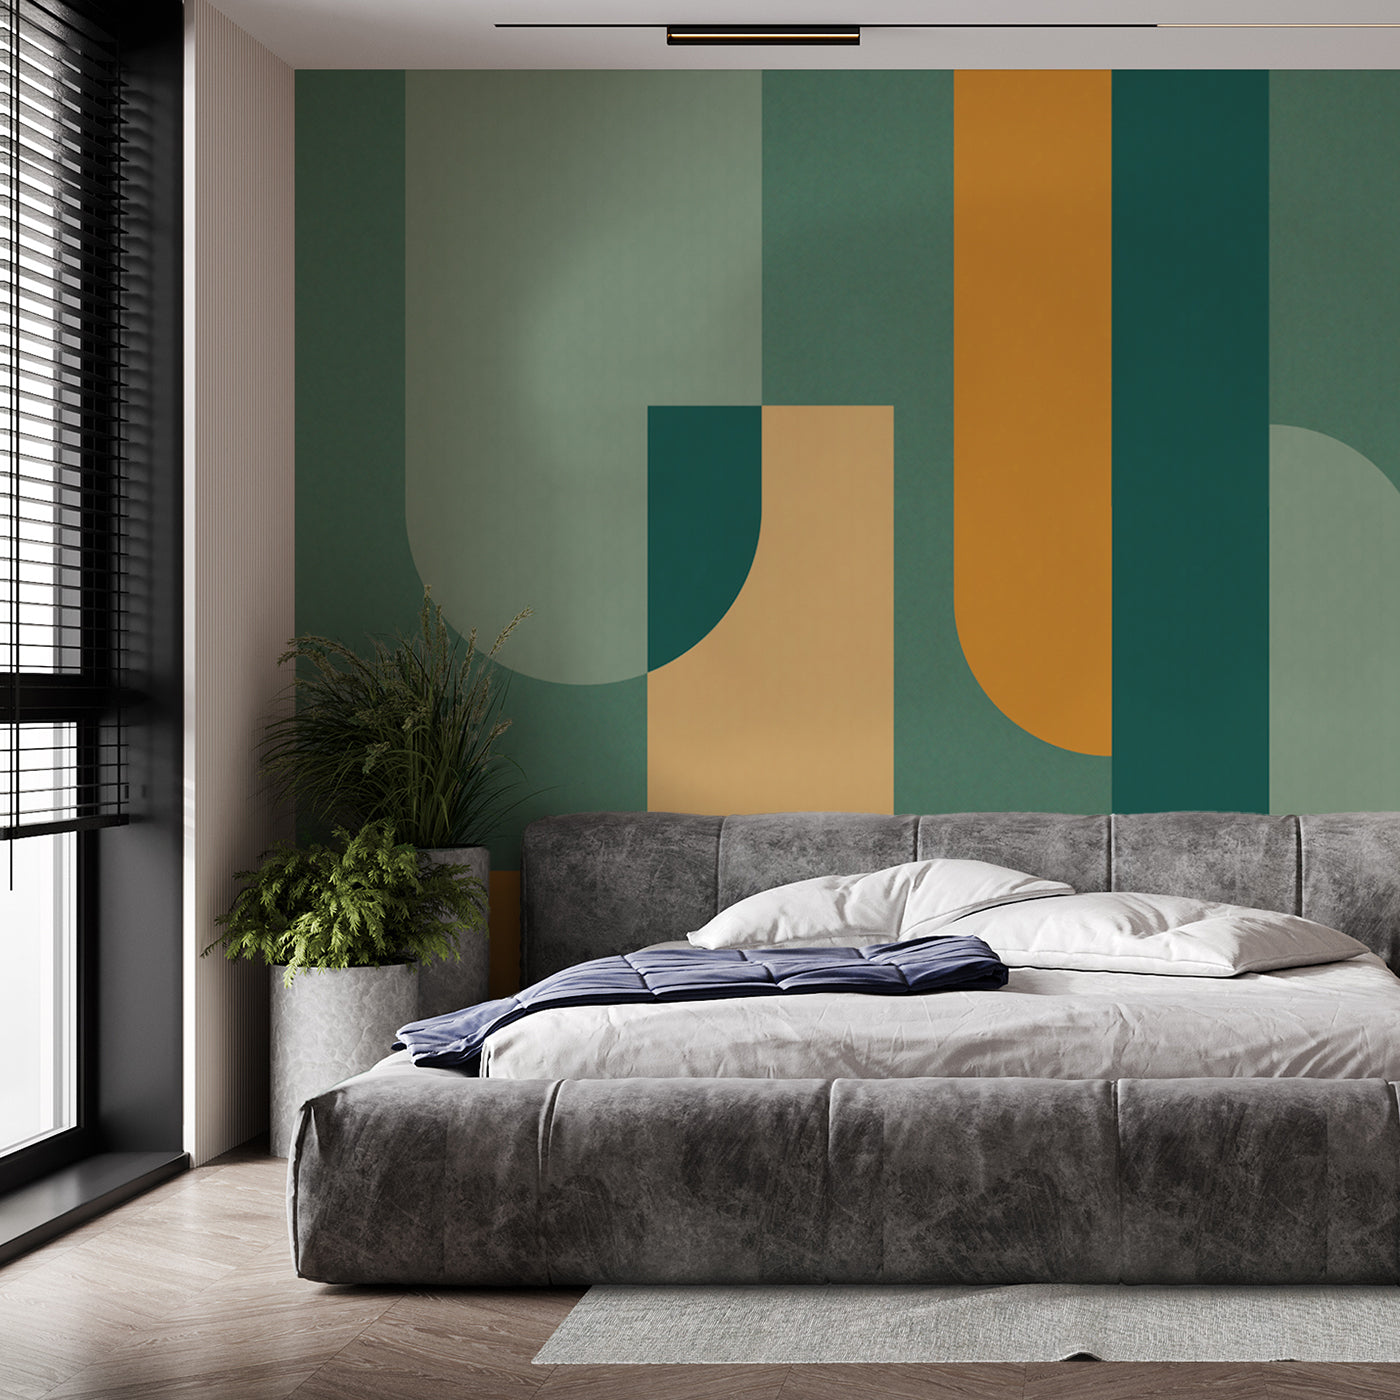 Composition Green Bhaus 100 Wallpaper - Alternative view 1